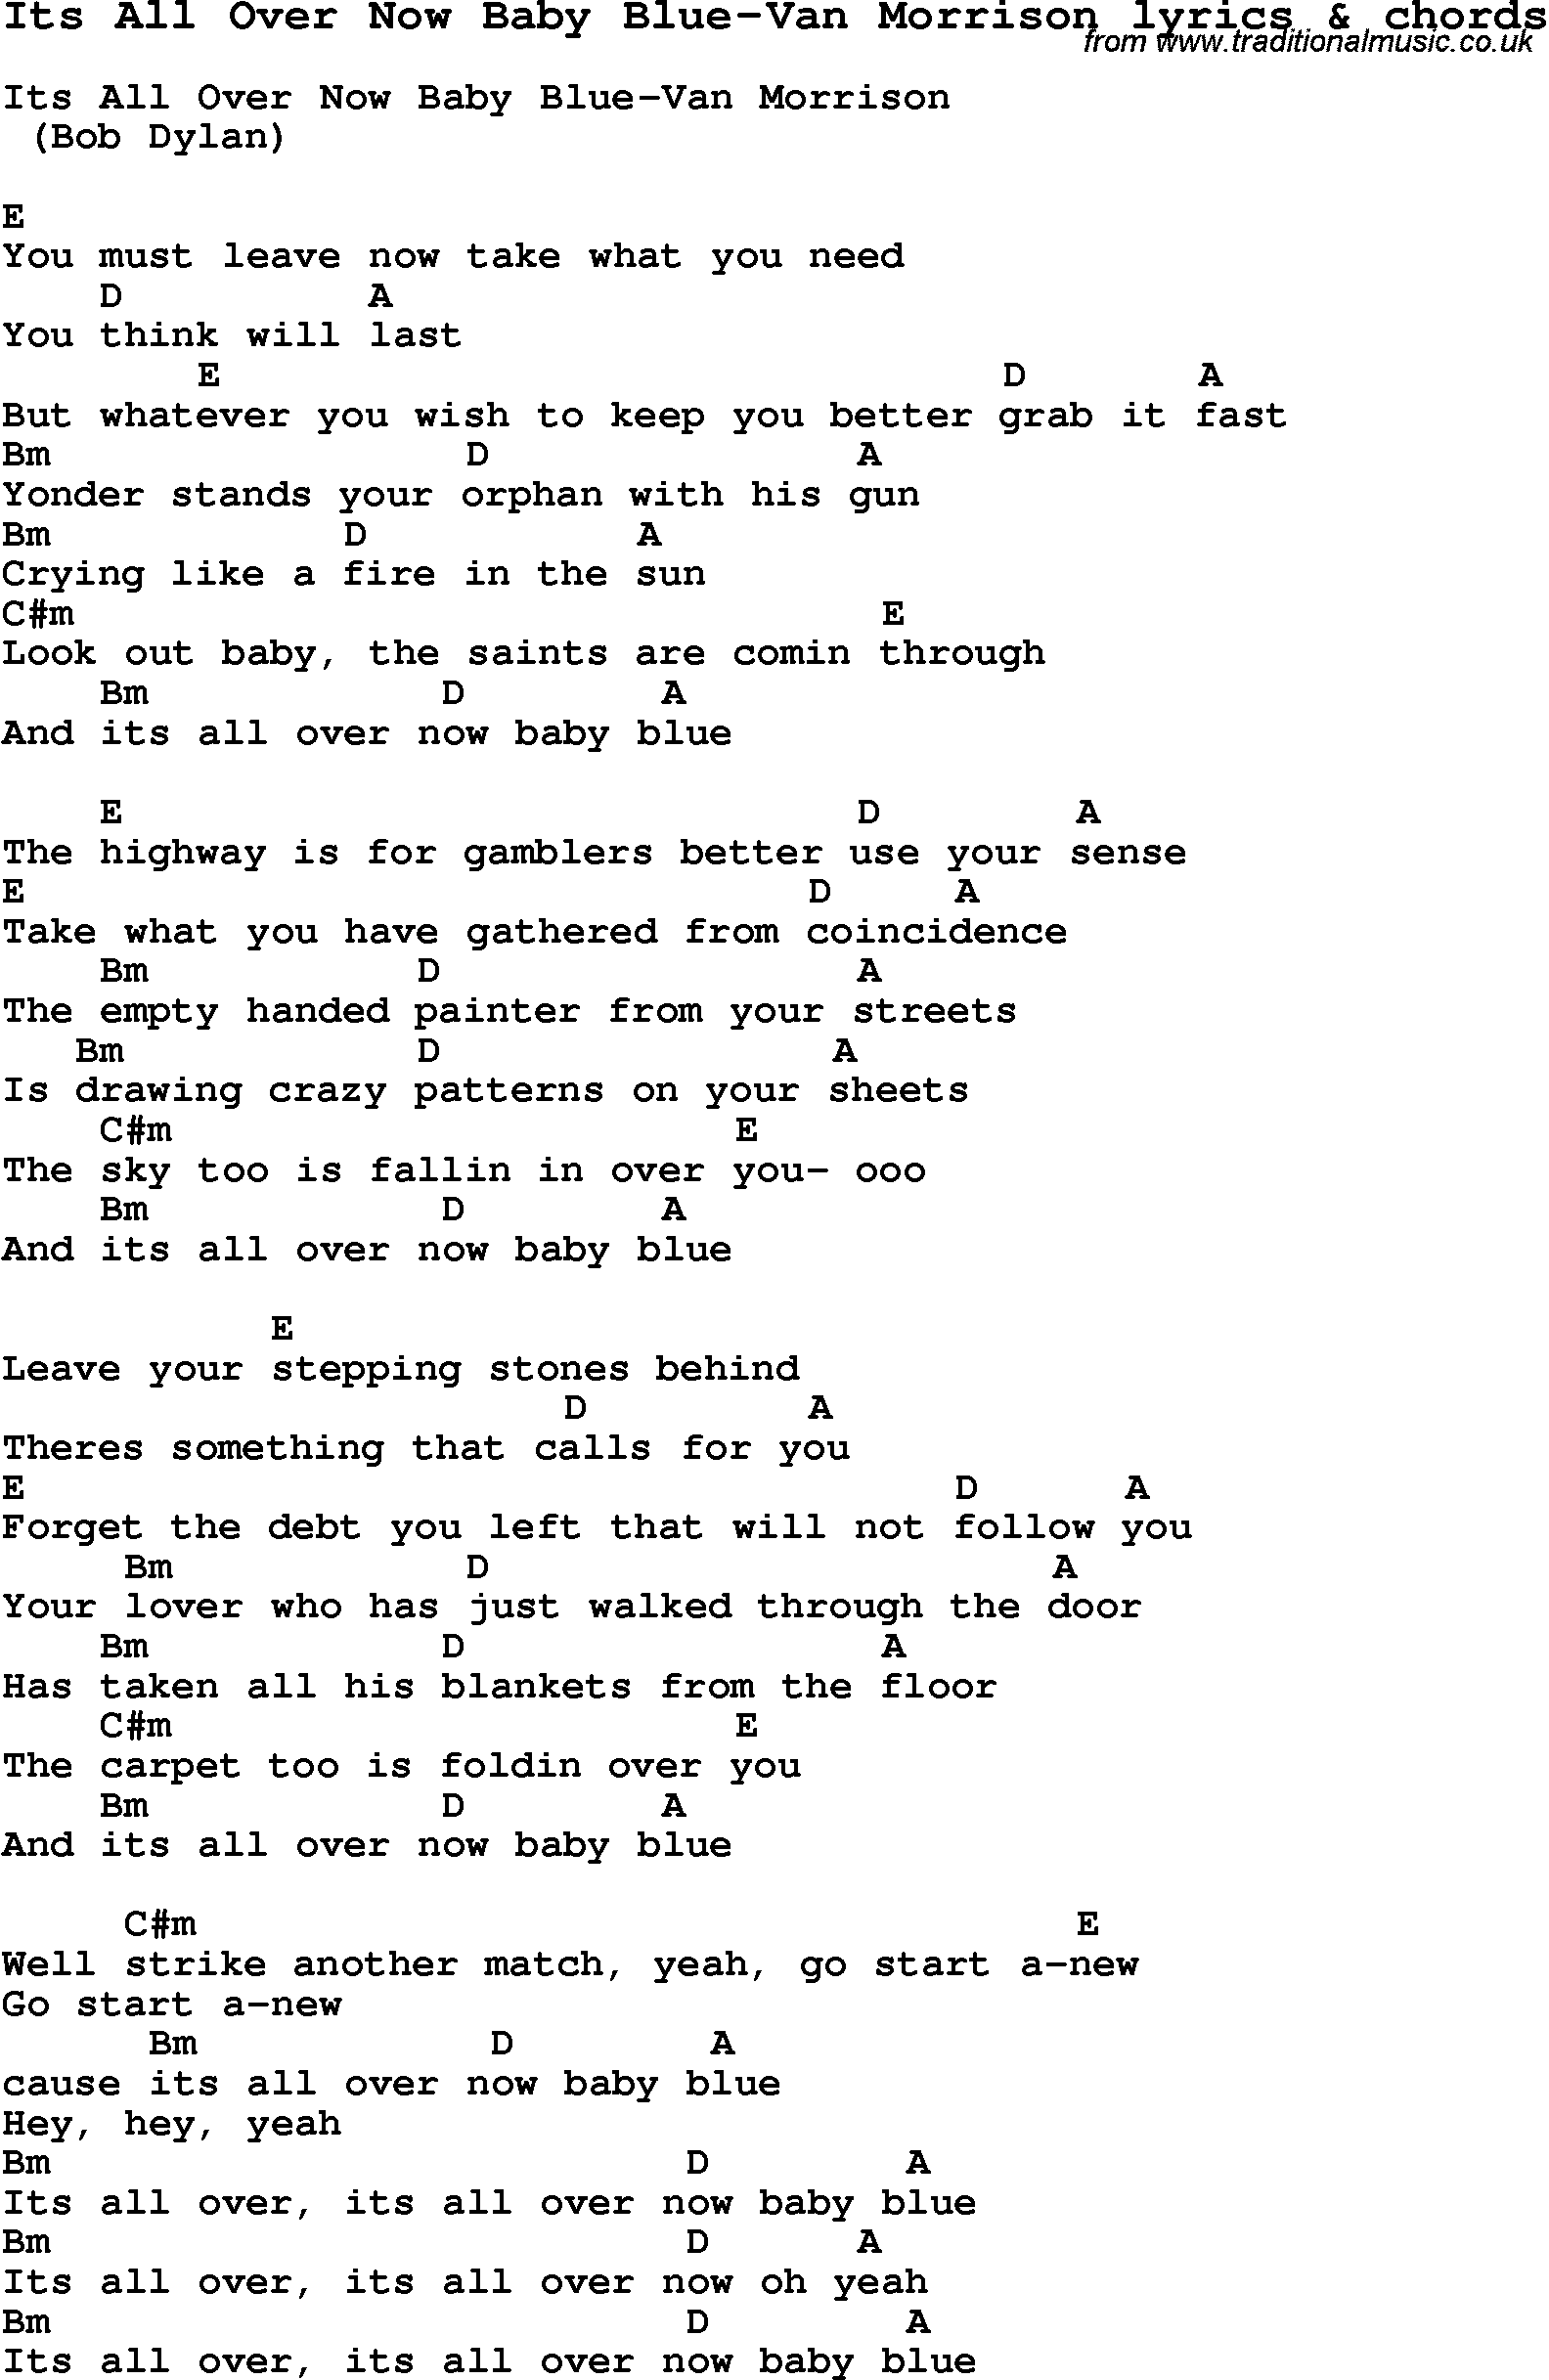 Love Song Lyrics for: Its All Over Now Baby Blue-Van Morrison with chords for Ukulele, Guitar Banjo etc.